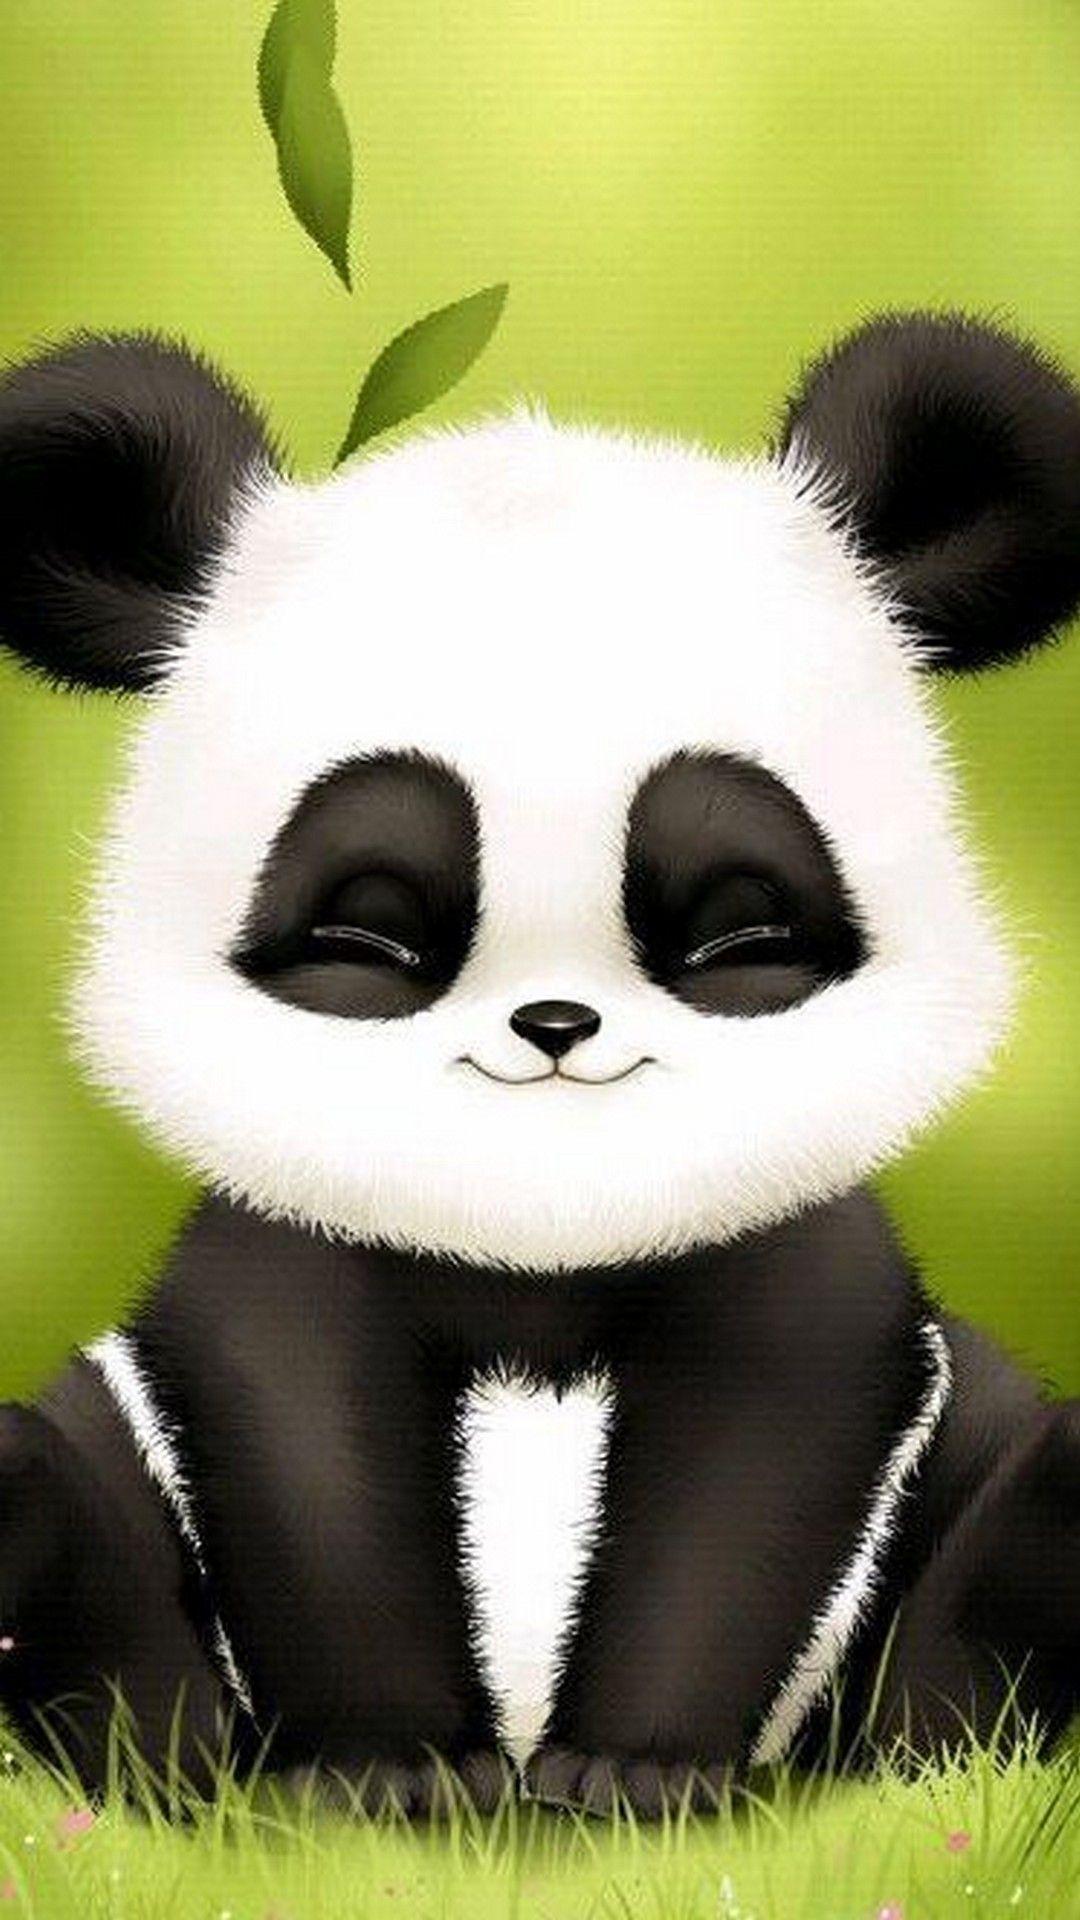 Cute Panda Wallpaper For Phone. Best HD Wallpaper. Panda background, Panda art, Cute panda wallpaper